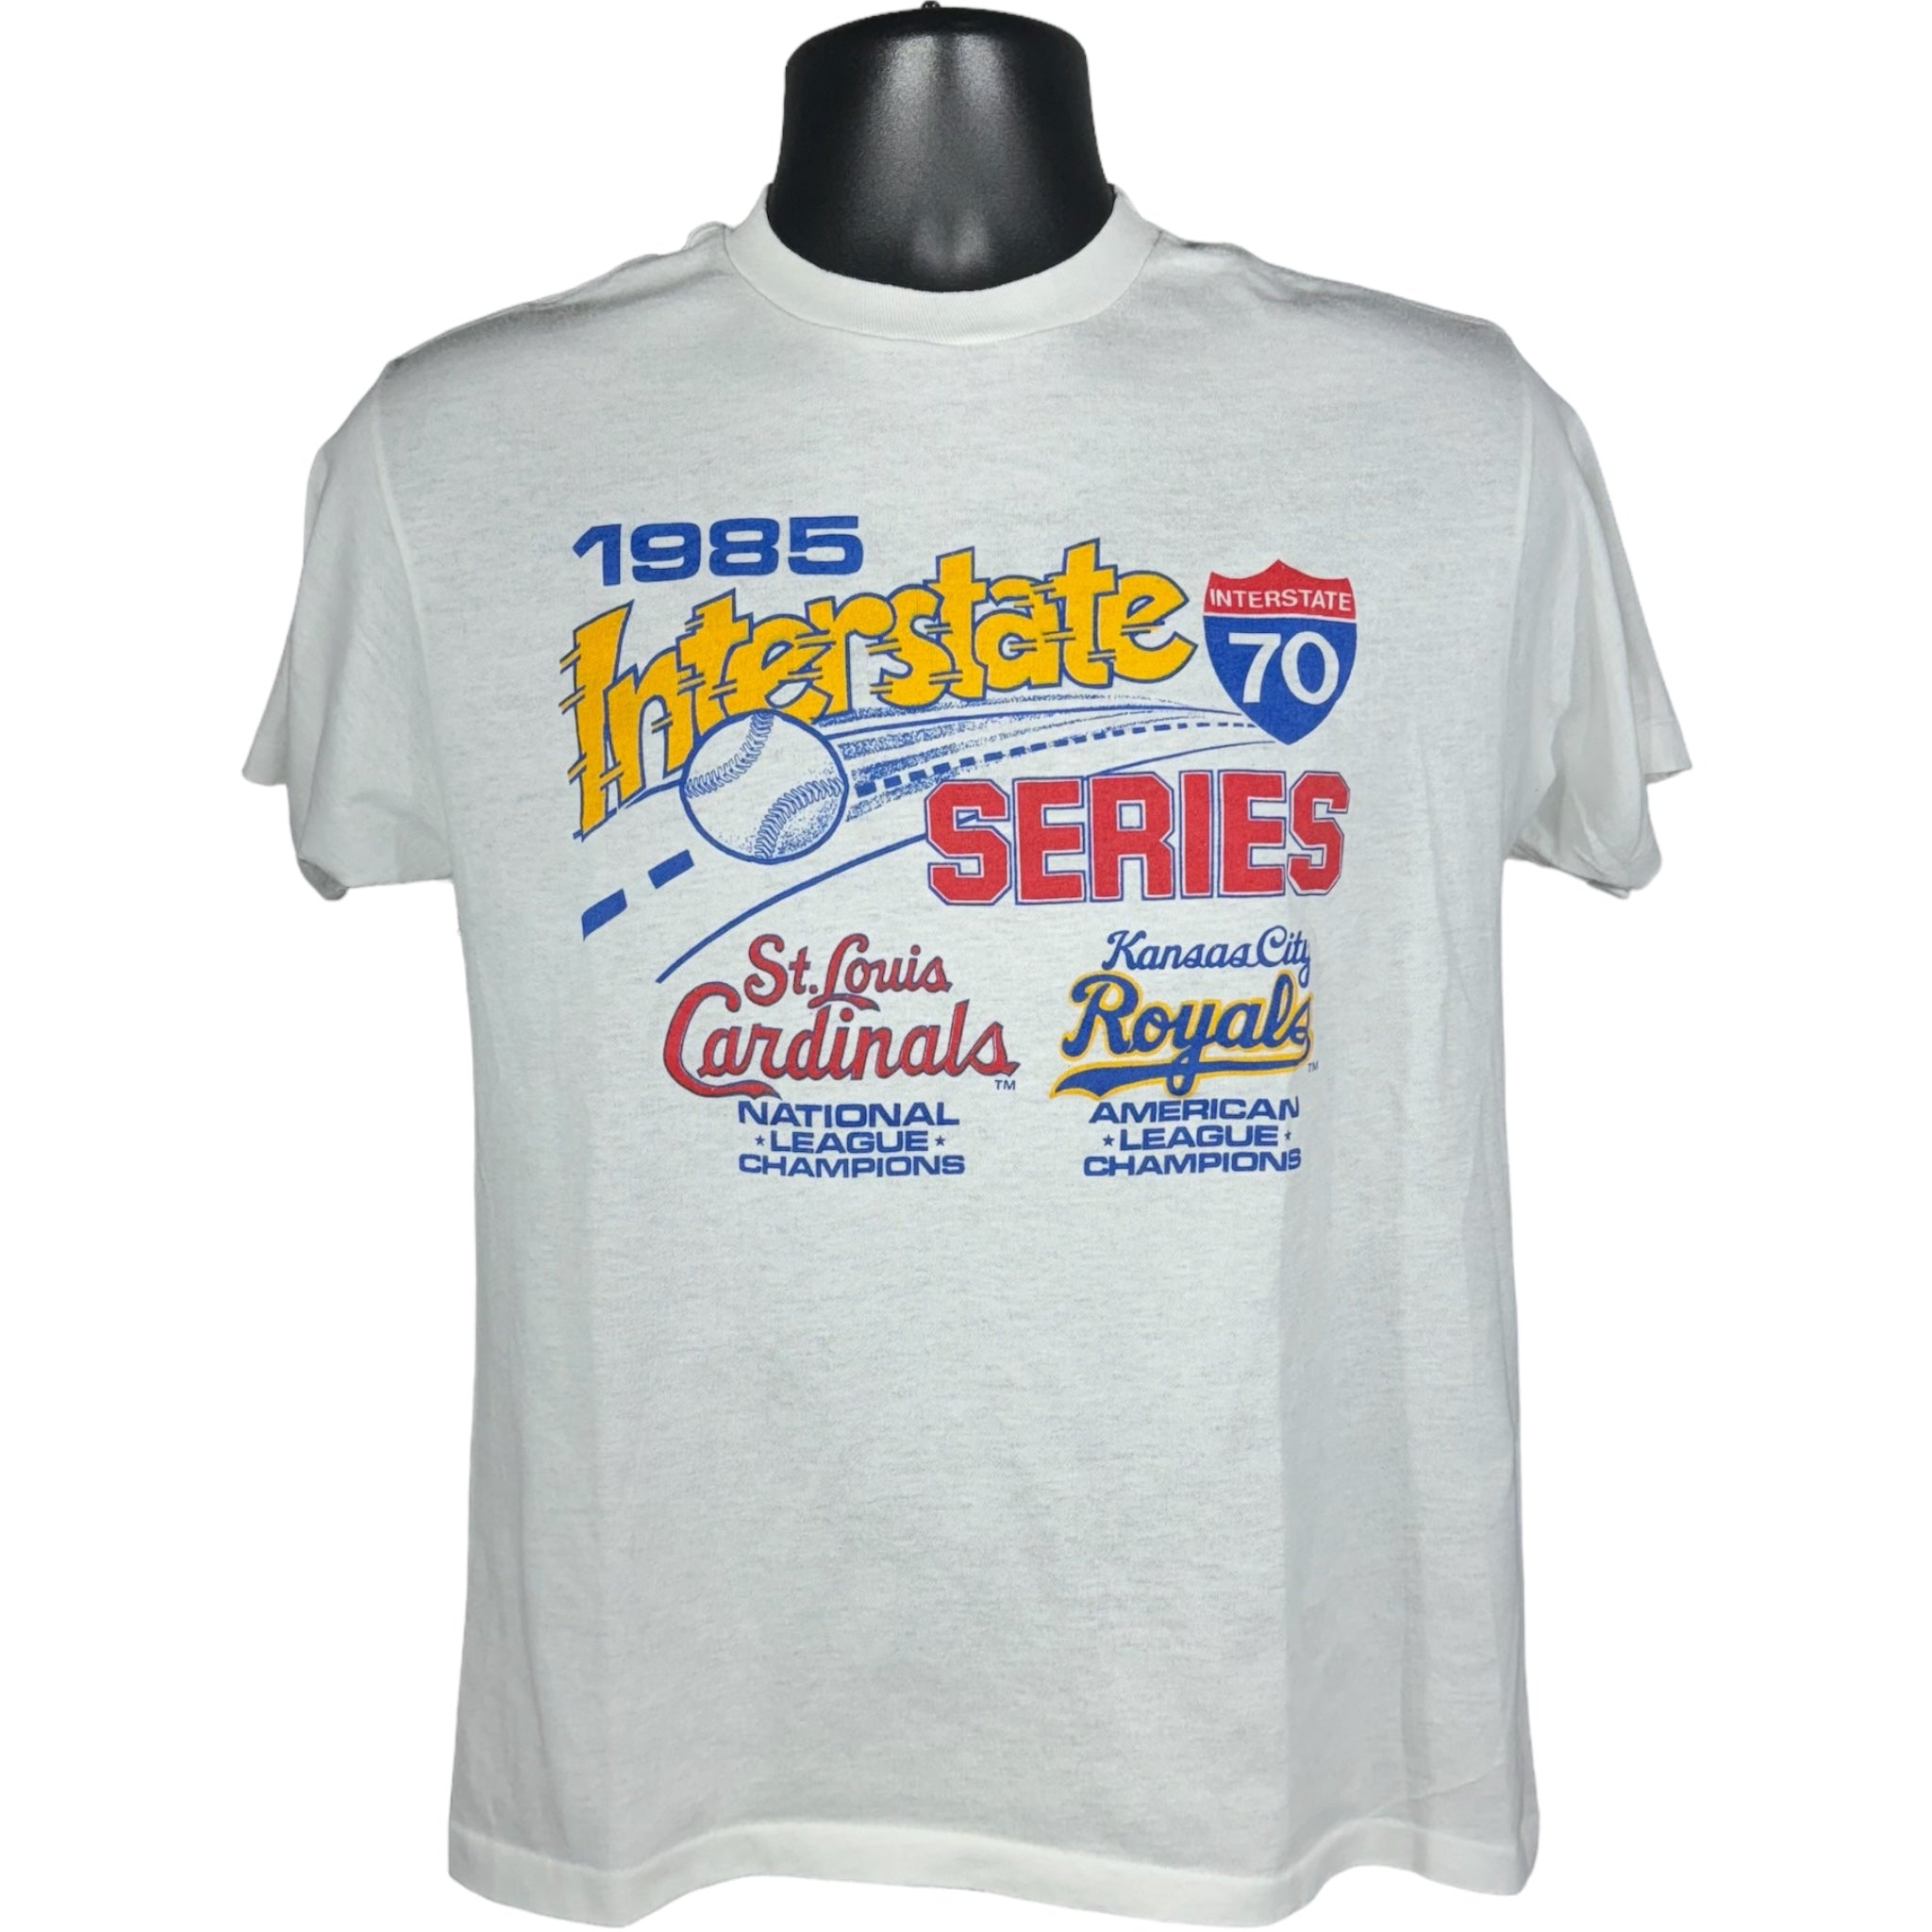 Vintage Interstate Series St. Louis Cardinals vs Kansas City Royals Youth Tee 1985